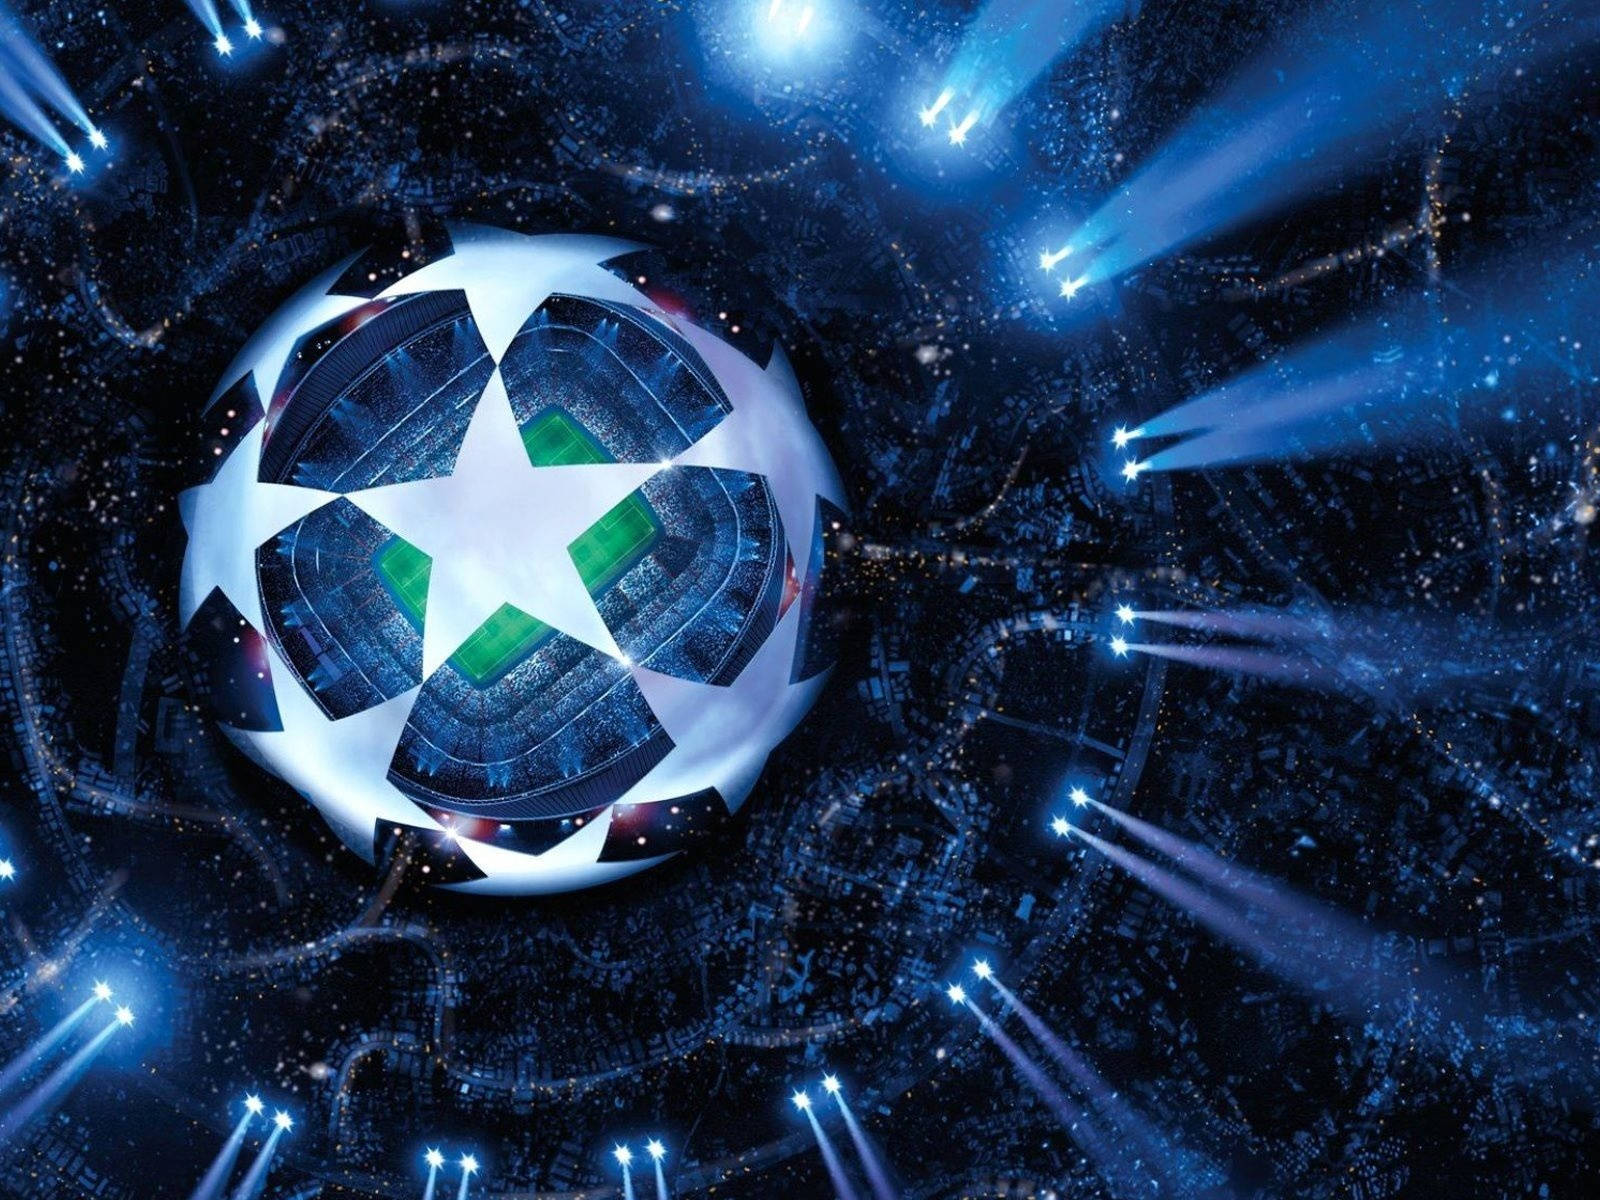 UEFA Champions League Star Stadium Wallpaper